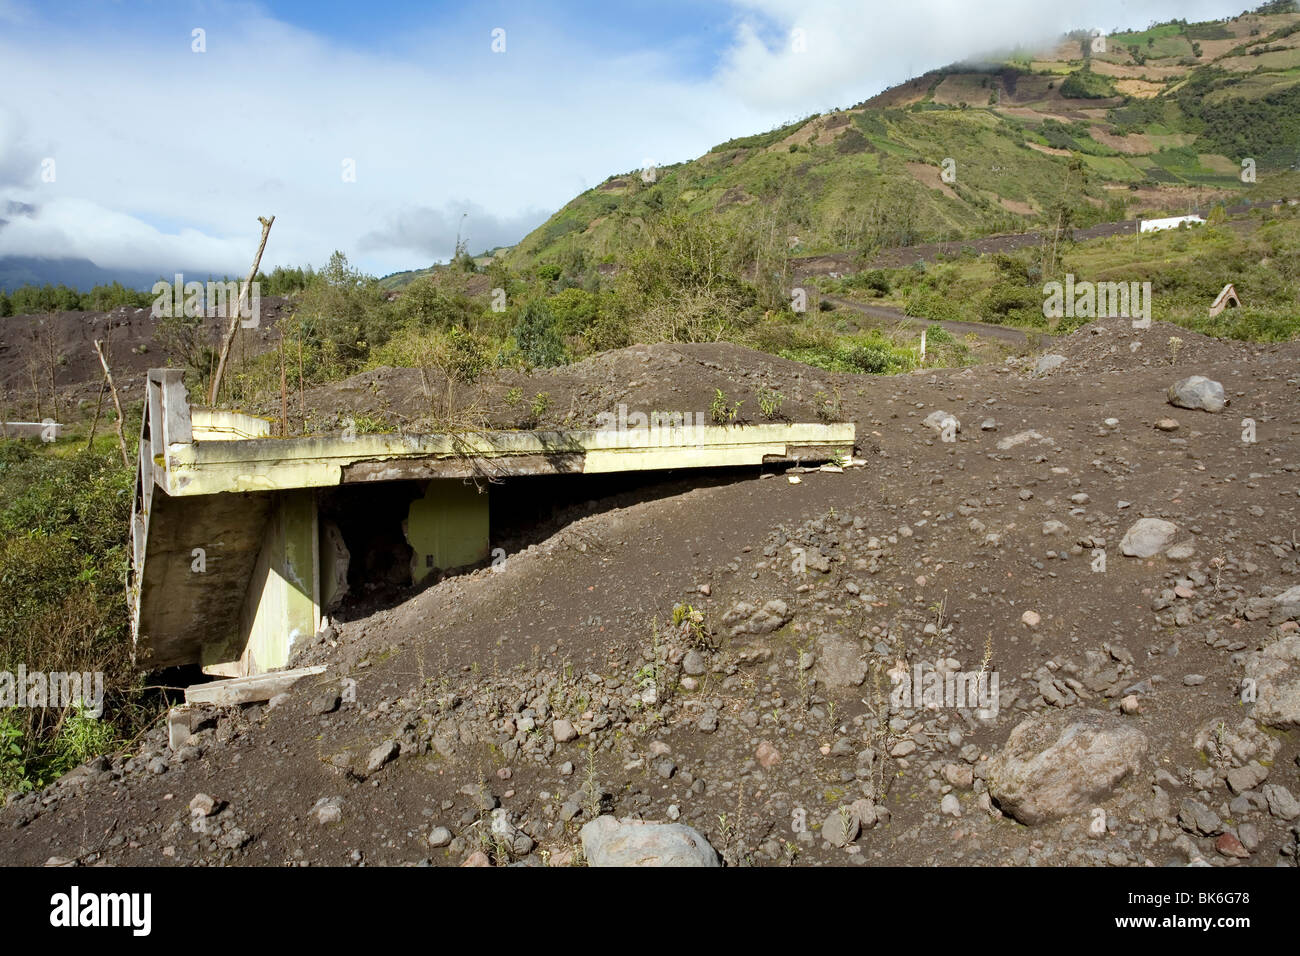 House buried in a lahar or ash flow from Tungurahua Volcano, Ecuador Stock Photo